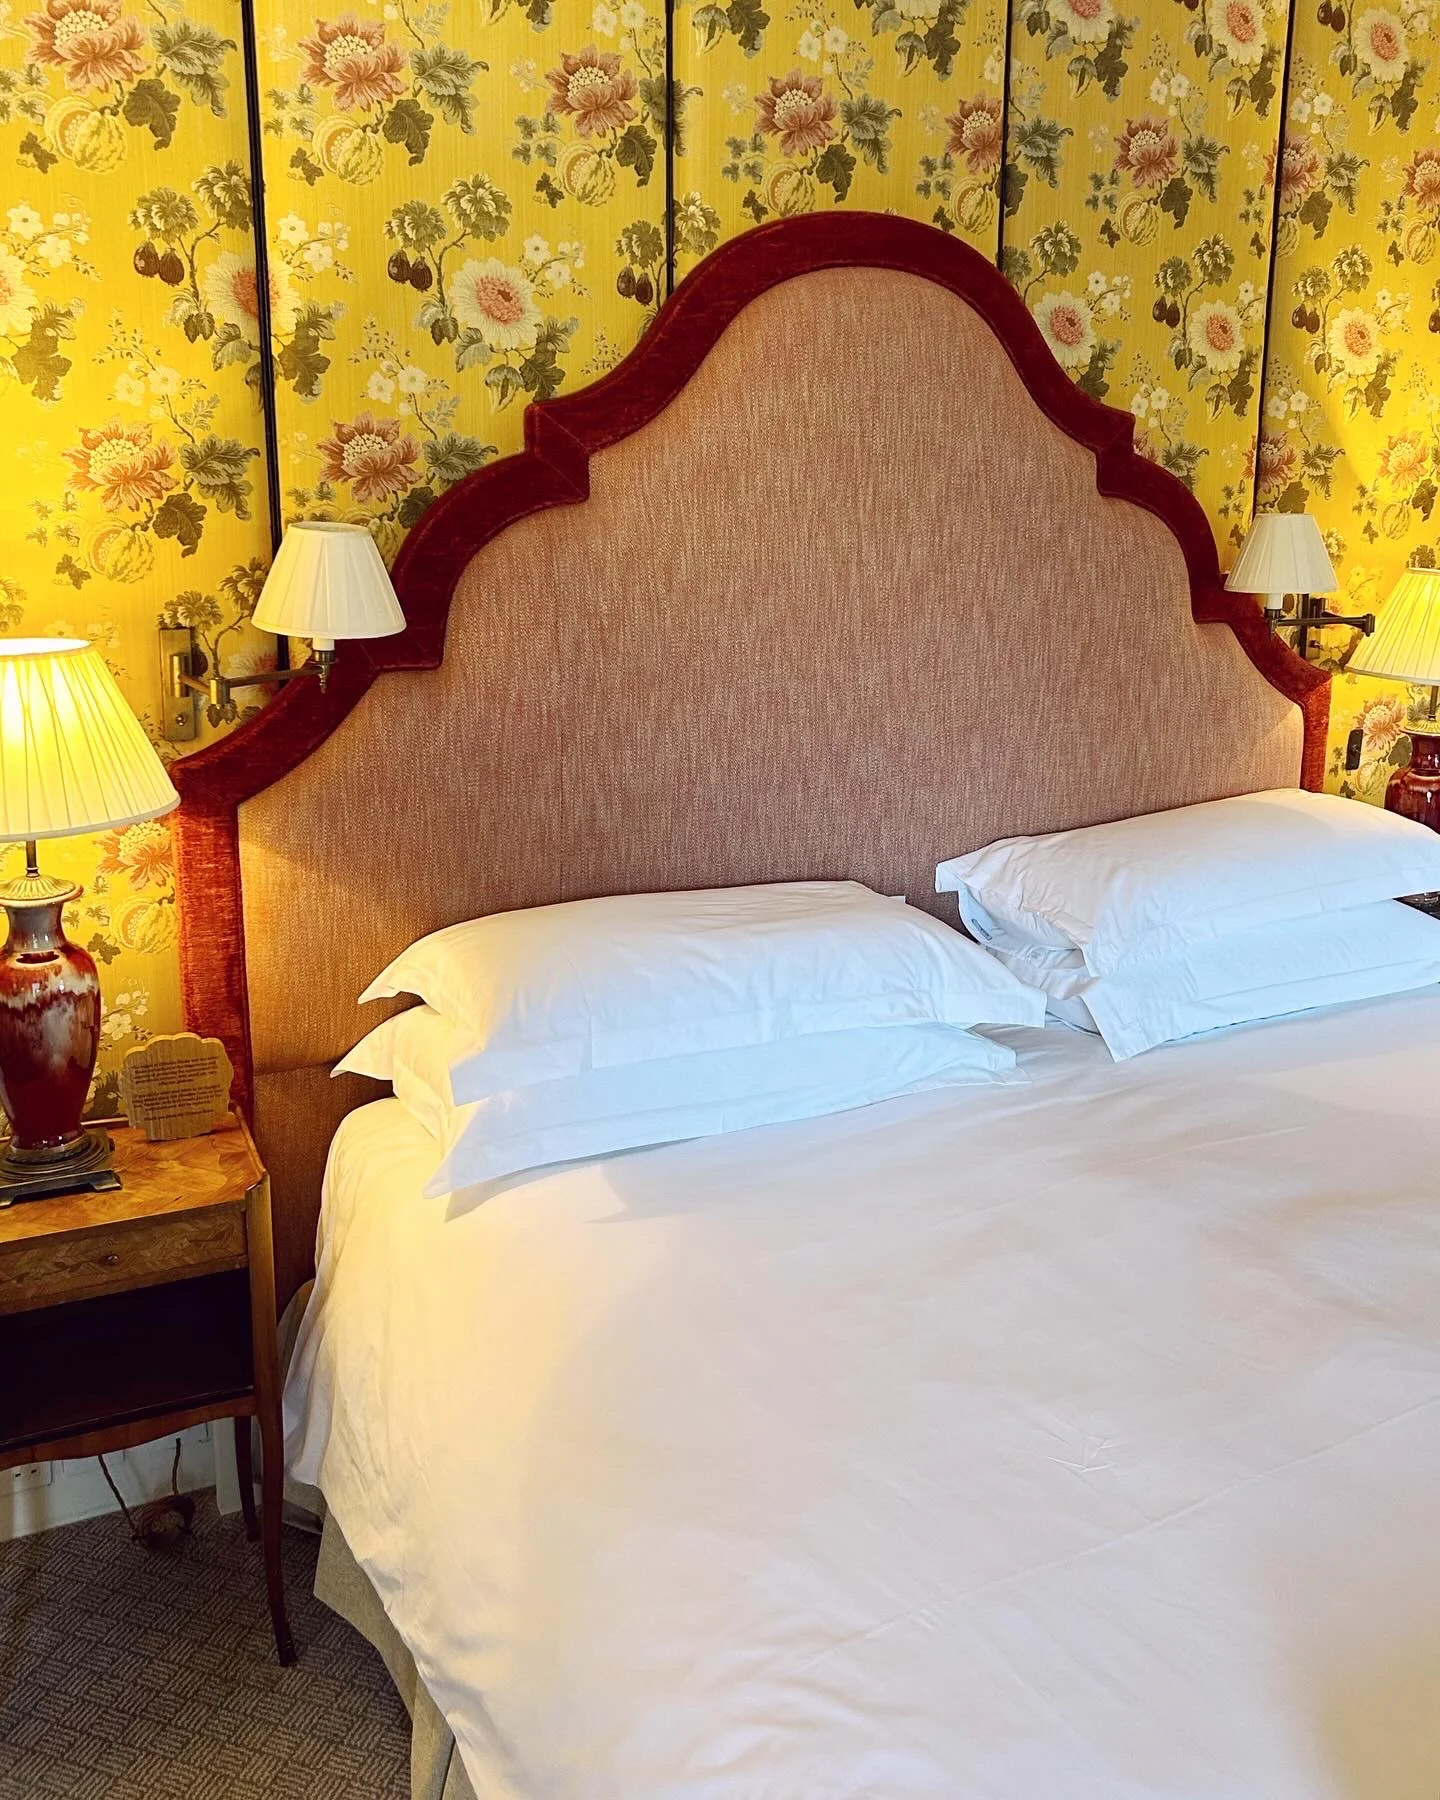 Bedroom at Cliveden House, Taplow, Berkshire - luxury UK 5 star hotel